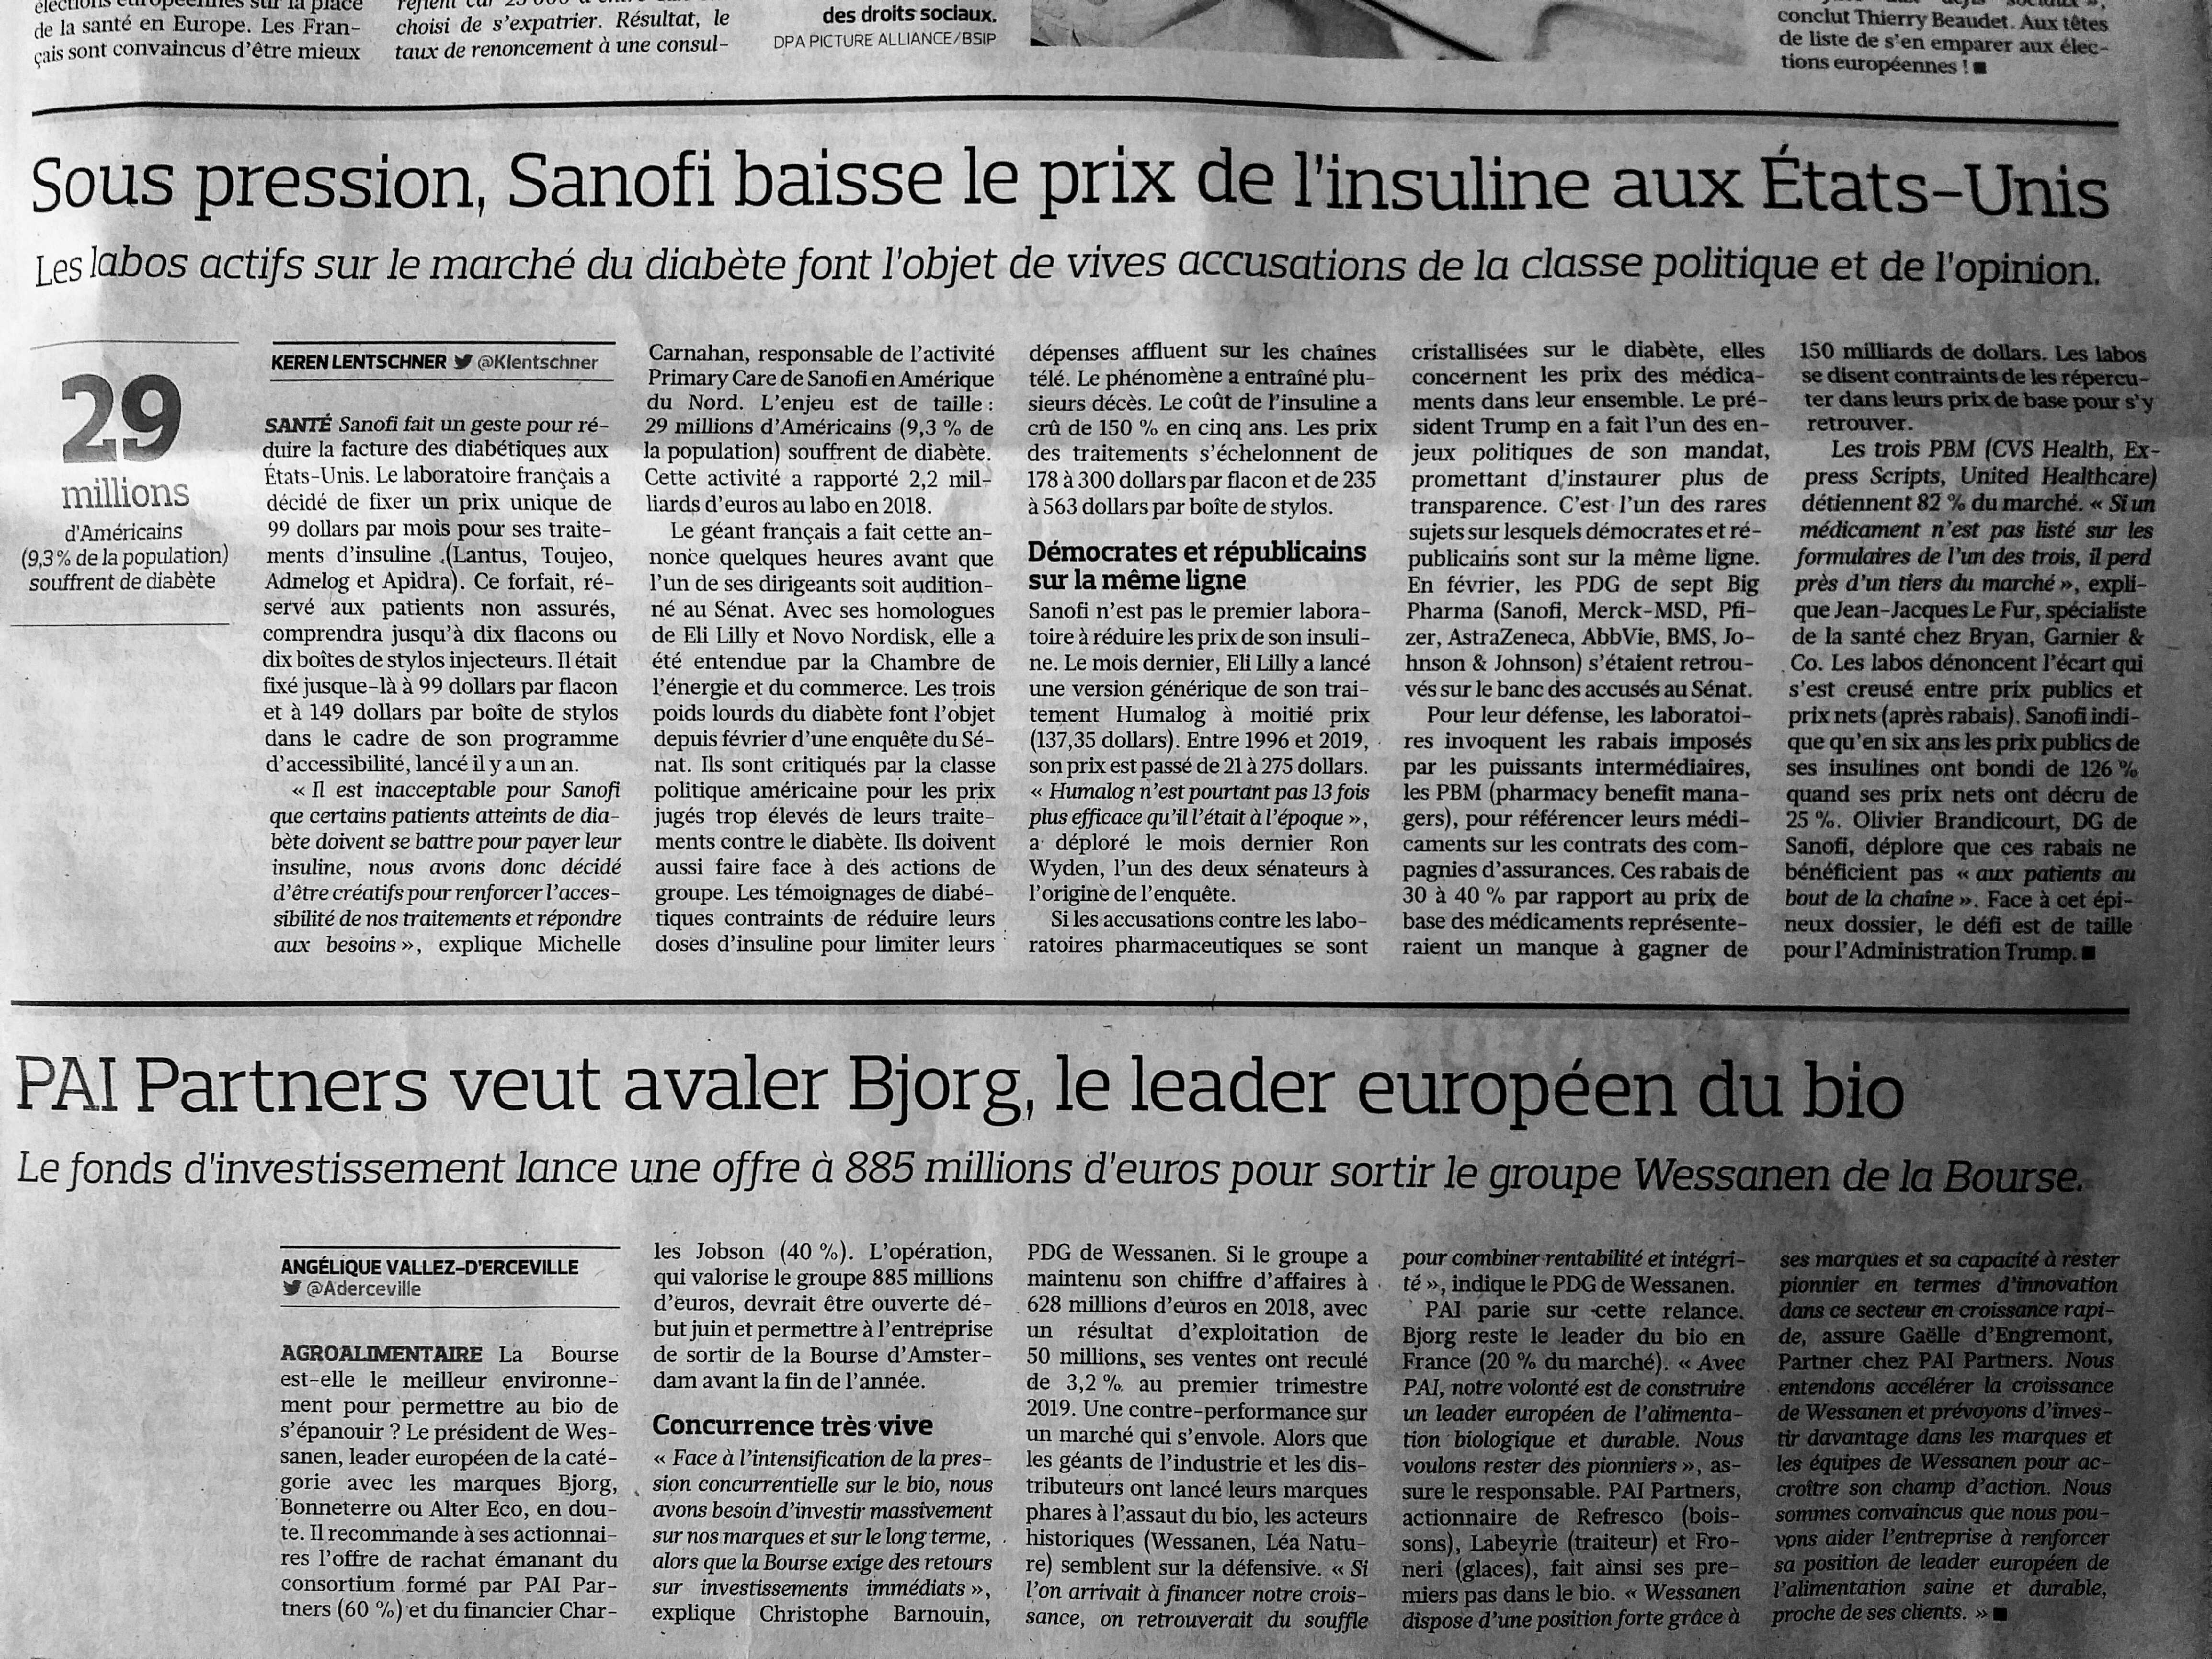 Le Figaro, 11 avril 2019